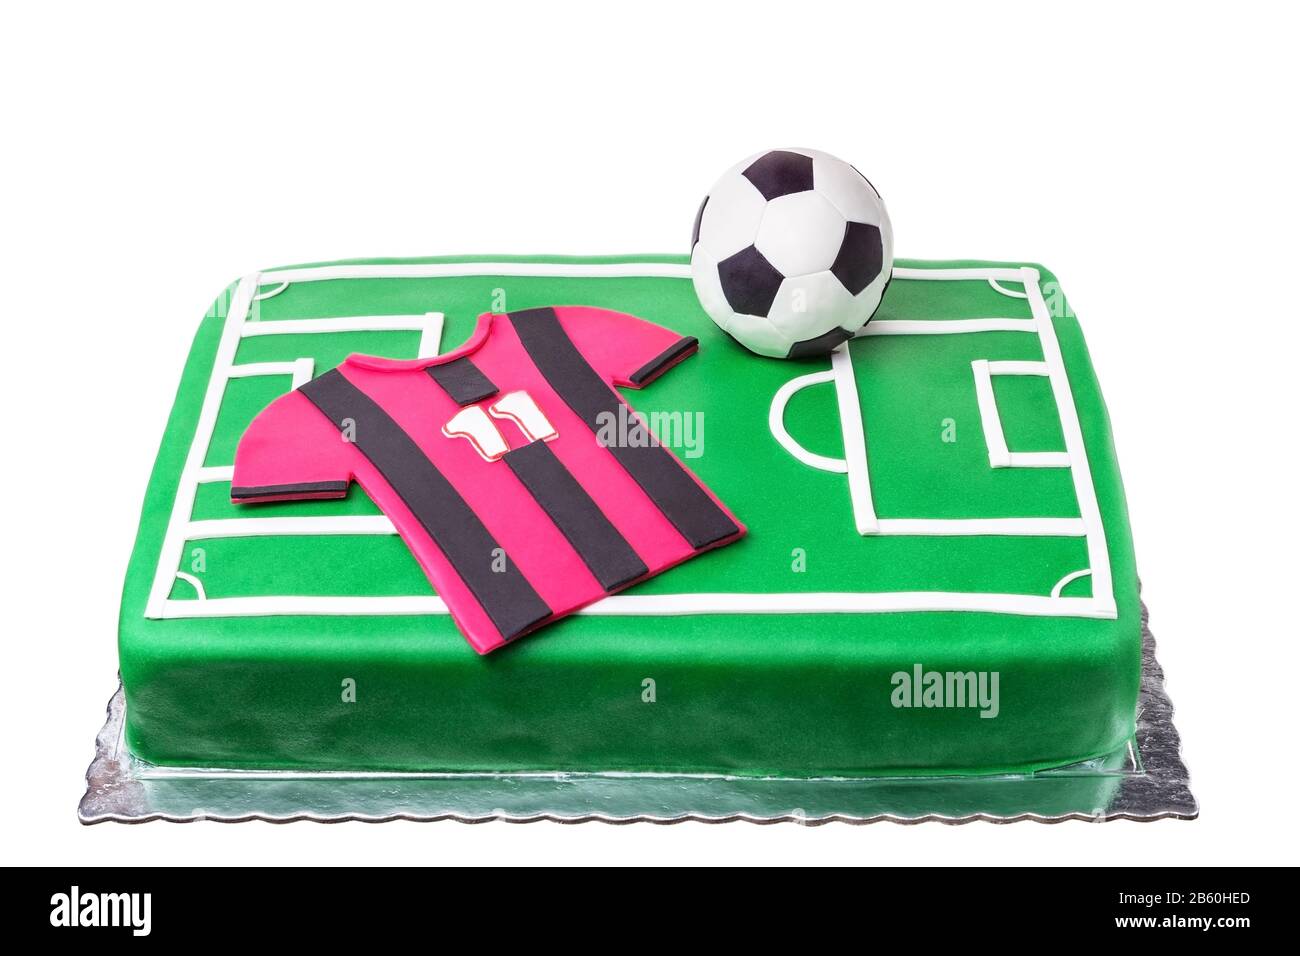 100 ideas de Futbol cake  torta futbol, tortas deportivas, pastel futbol